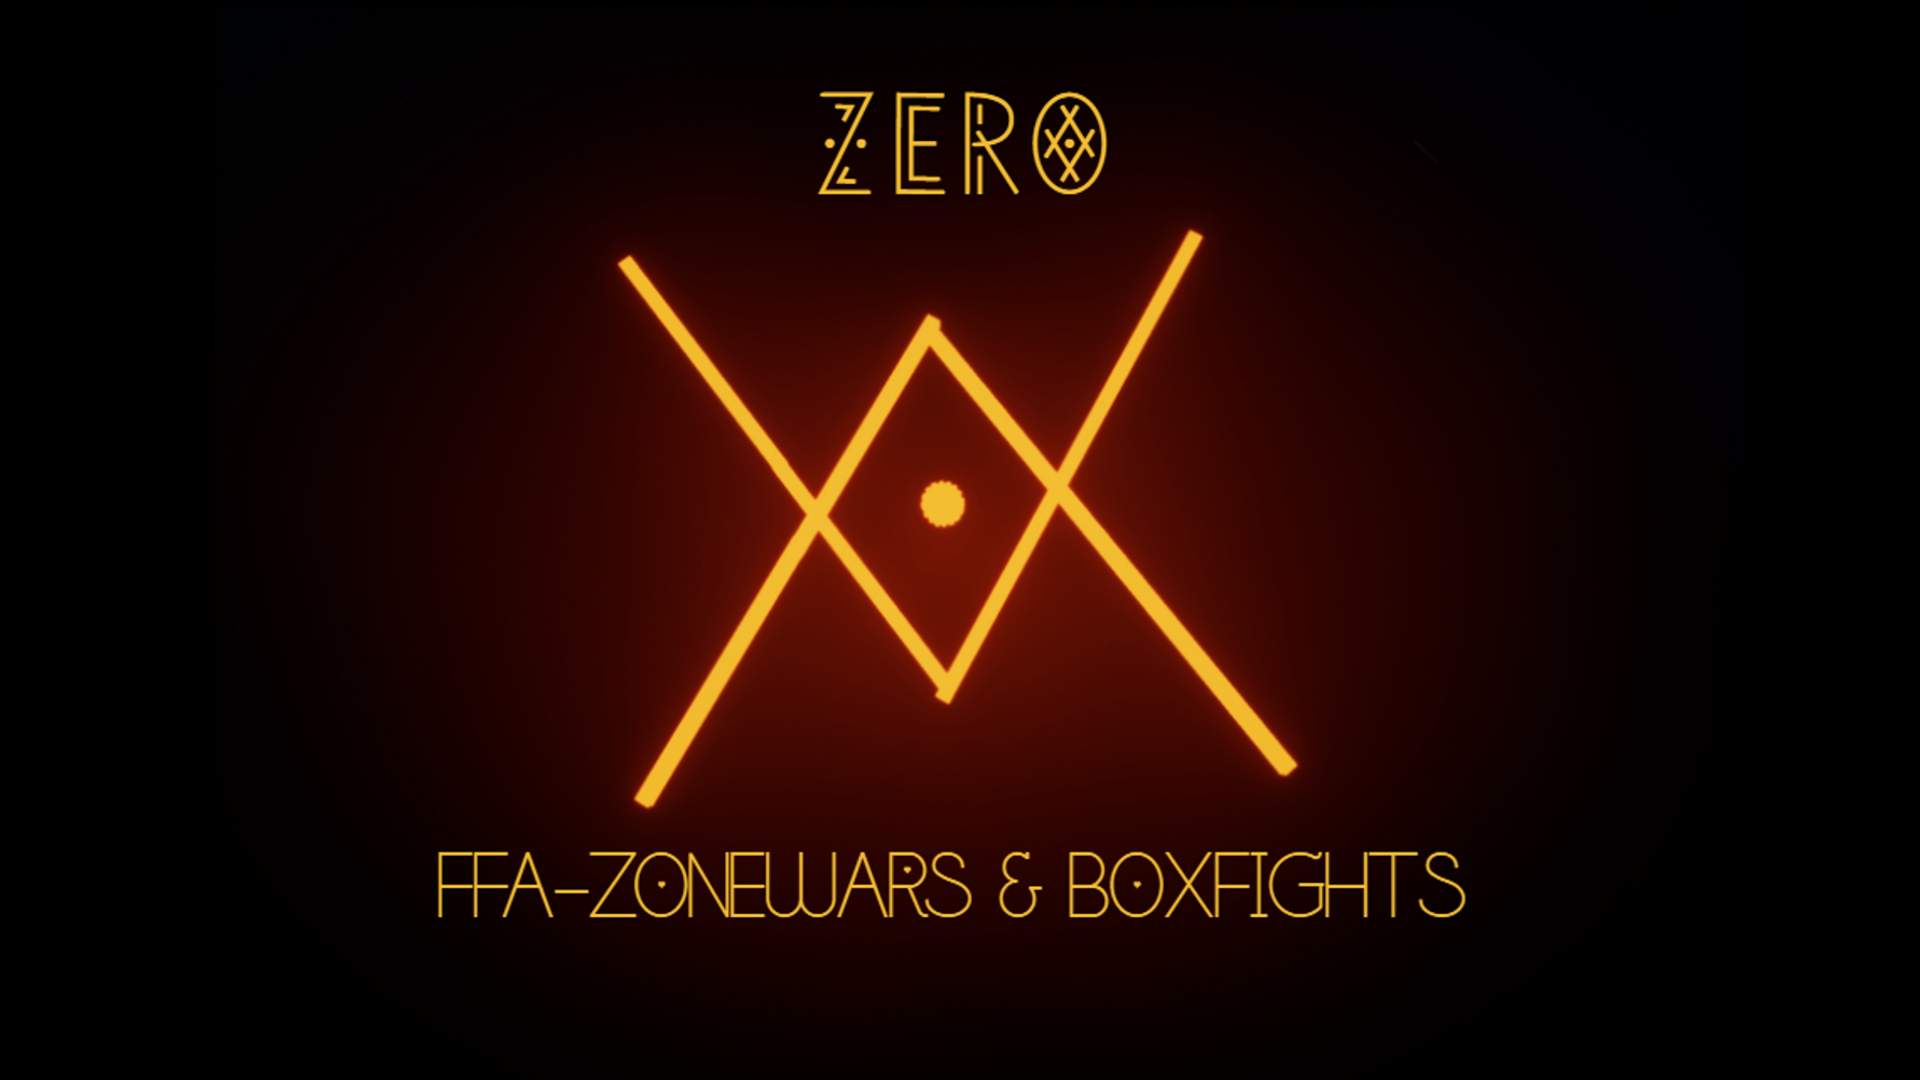 ZERO - FFA ZONEWARS & BOXFIGHTS image 2